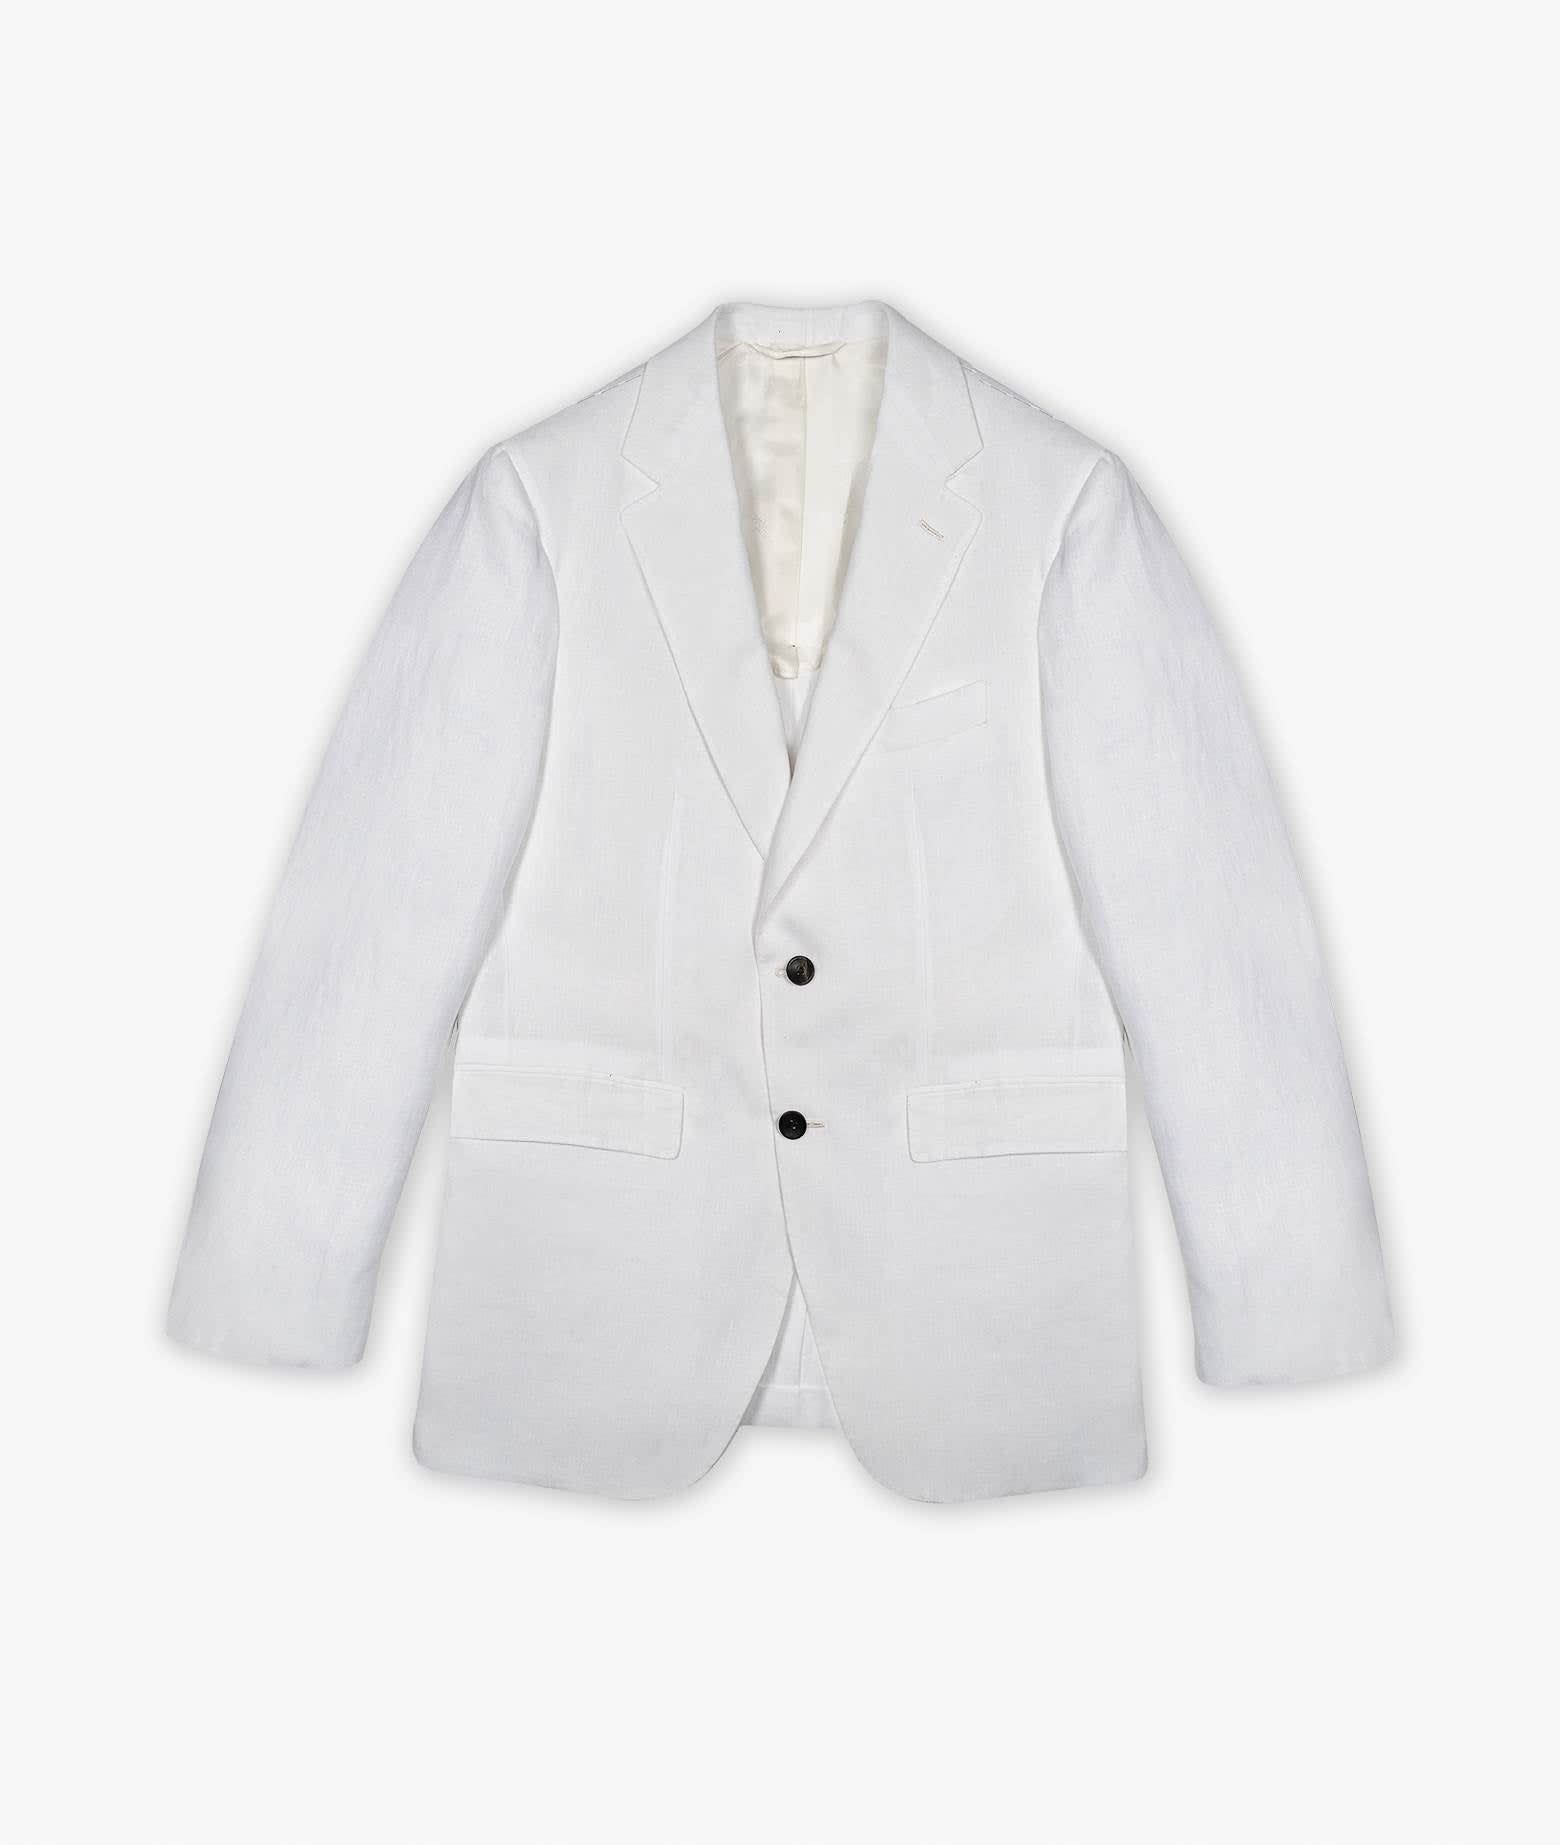 Larusmiani Handmade Jacket Godard Blazer In White